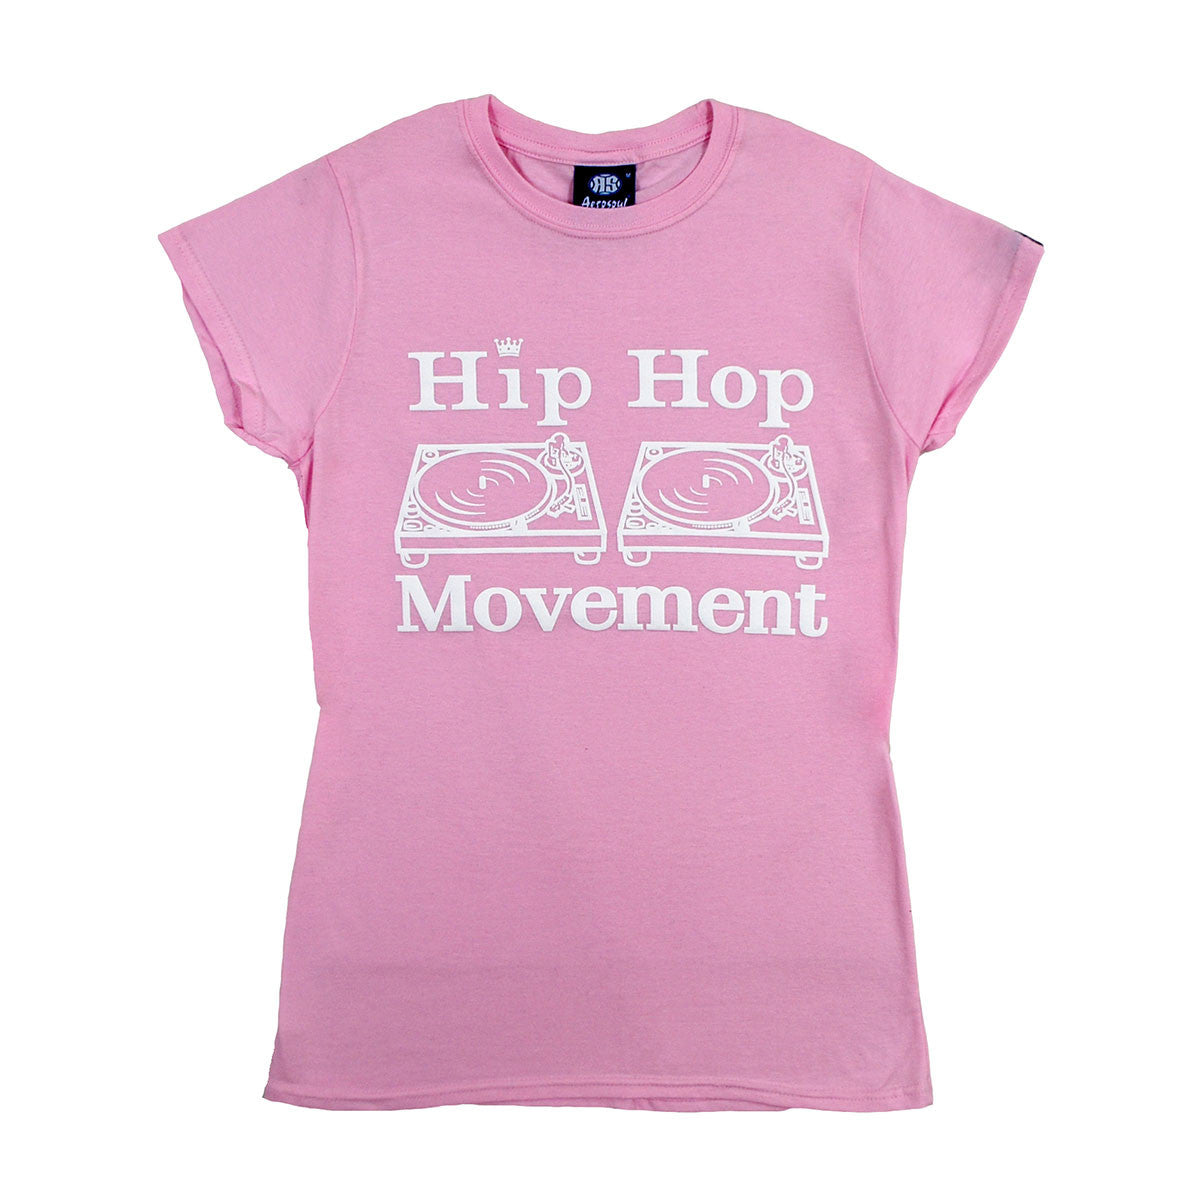 Hip Hop Movement Ladies Teeshirt (Pink)